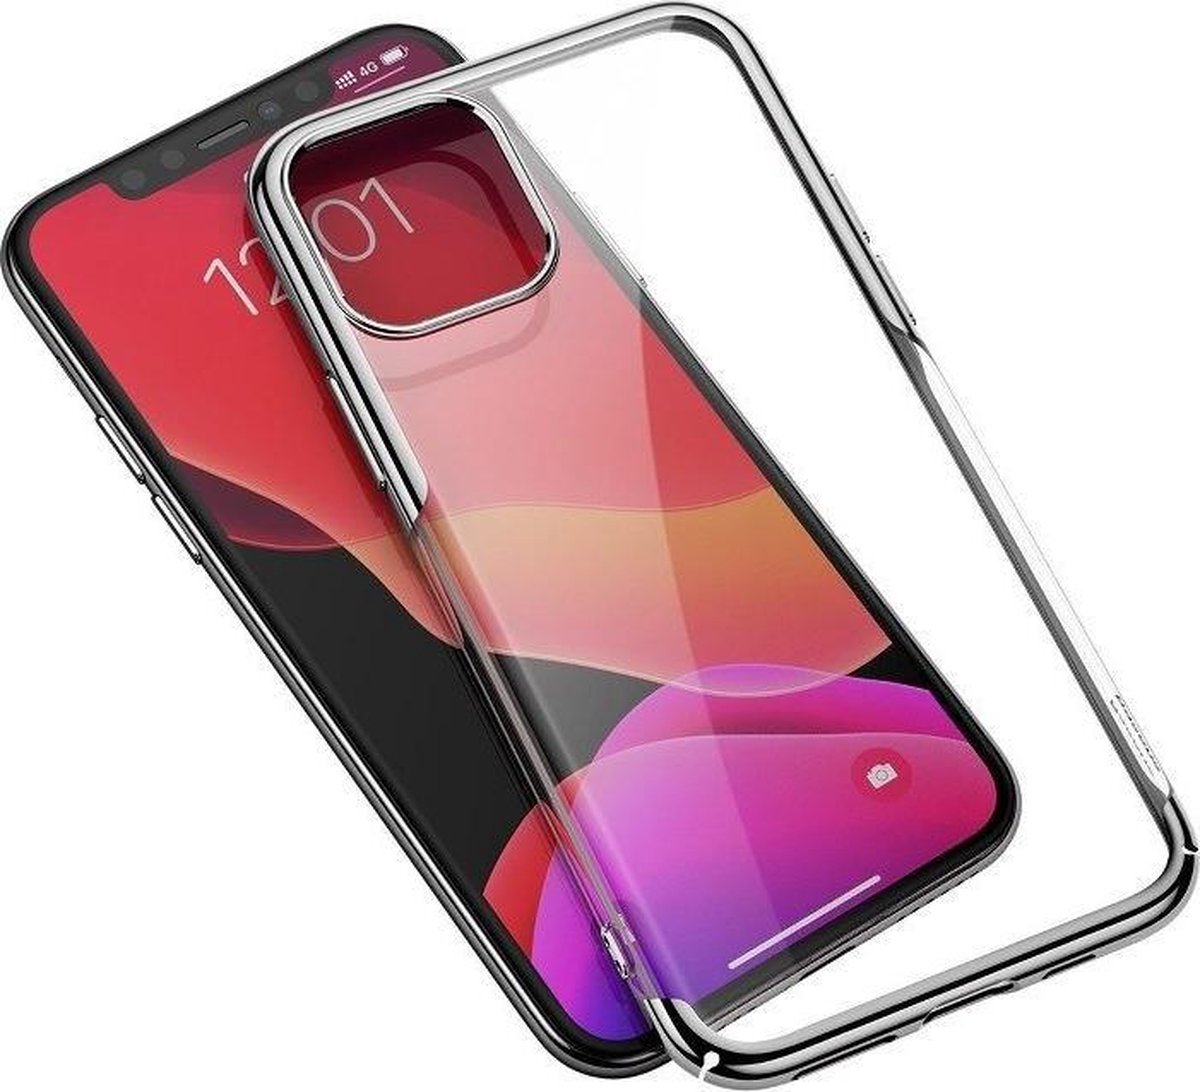 Beschermende hardcase iPhone 11 Pro Max - Glitter - Transparant/zilver